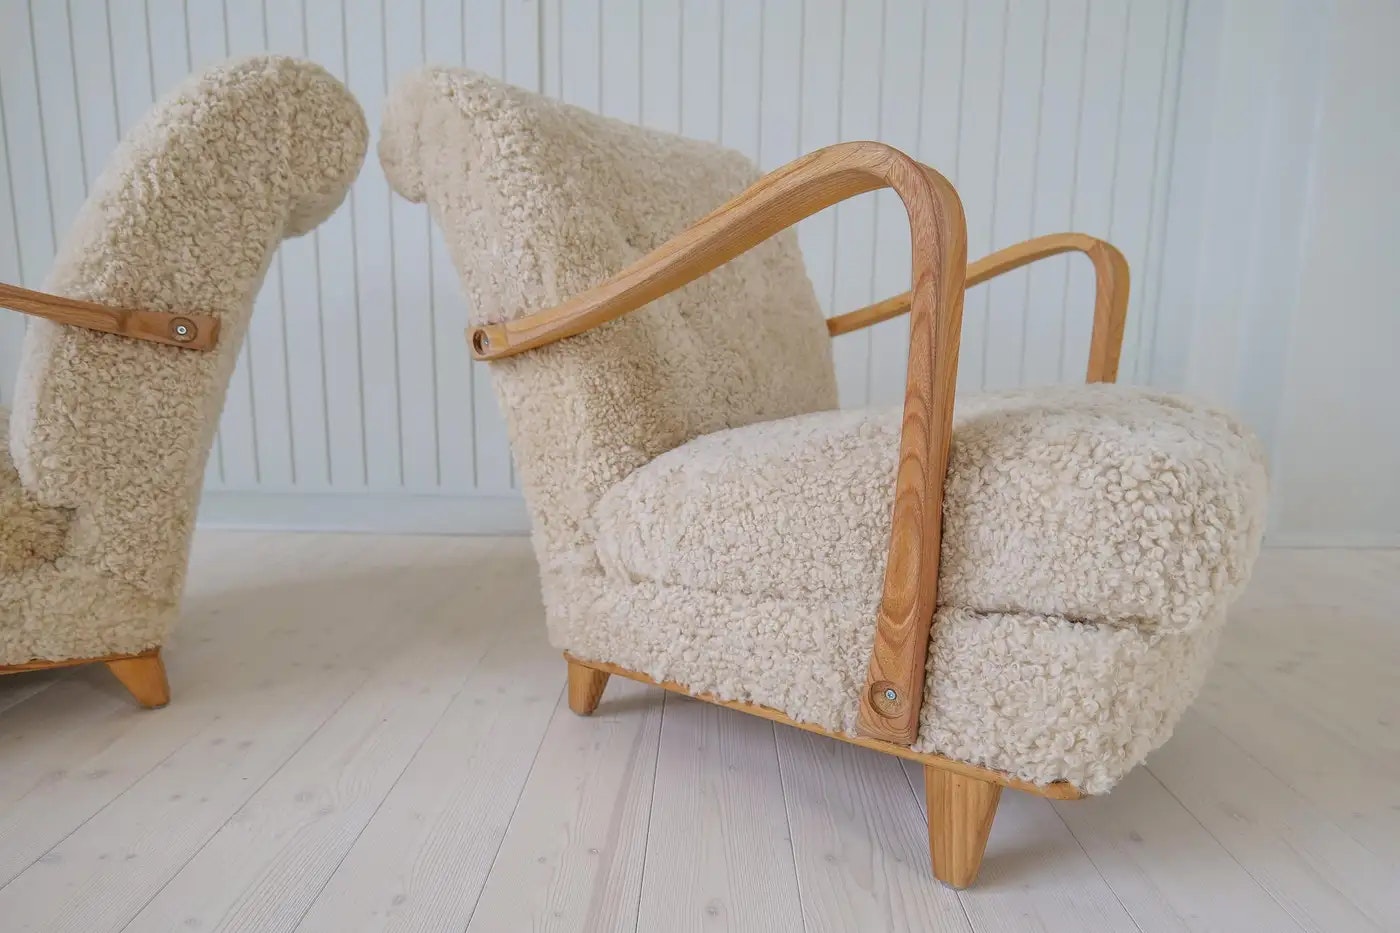 Swedish Modern Lounge Chairs in Shearling / Sheepskin and Elm, 1940s